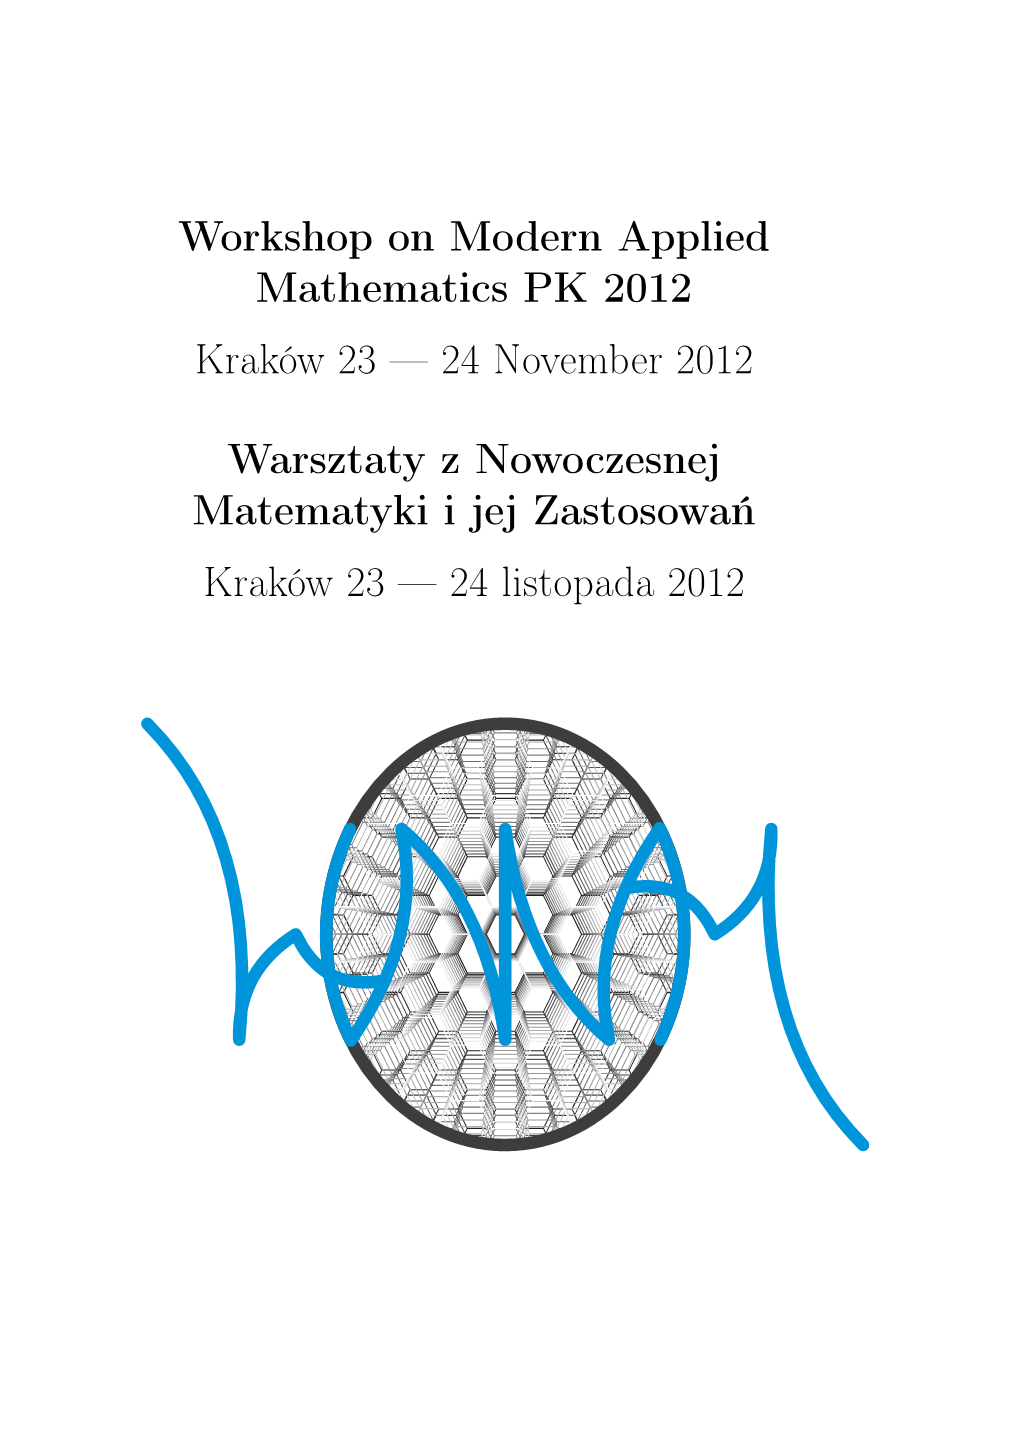 Workshop on Modern Applied Mathematics PK 2012 Kraków 23 — 24 November 2012